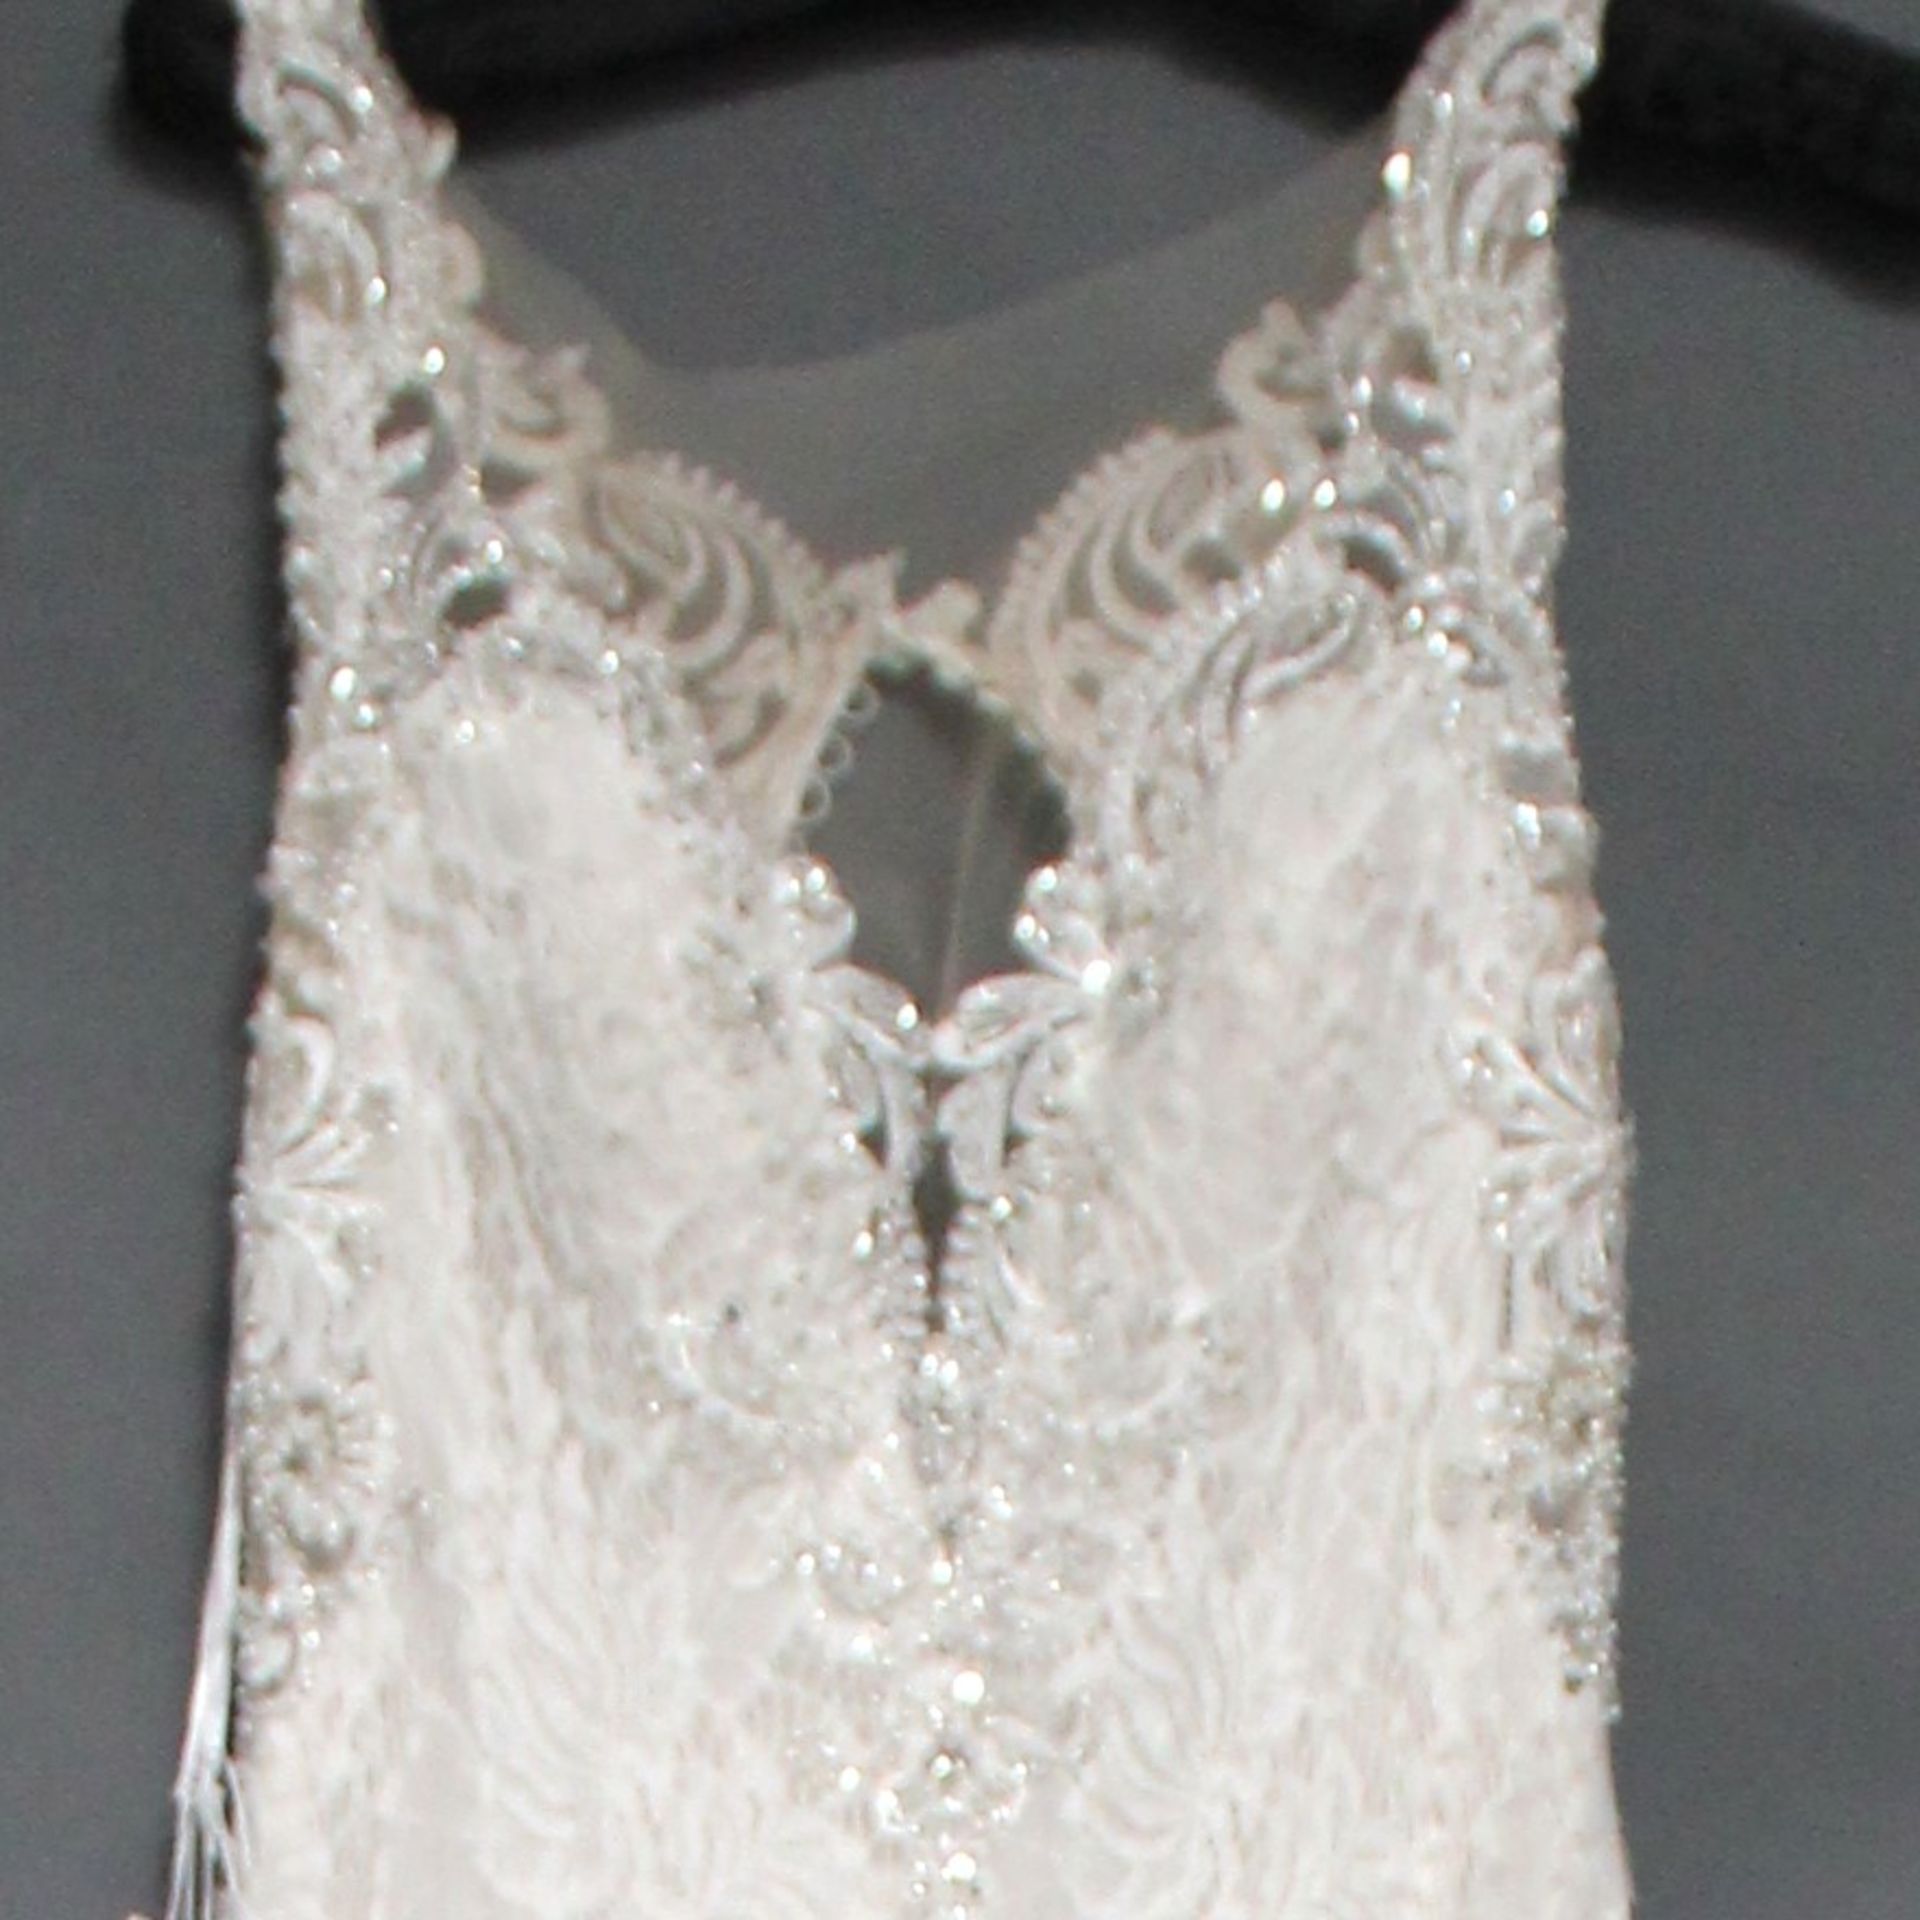 1 x ALLURE BRIDAL Stunning Lace And Beaded Plunge Neckline Designer Wedding Dress RRP £1,200 UK10 - Image 5 of 10